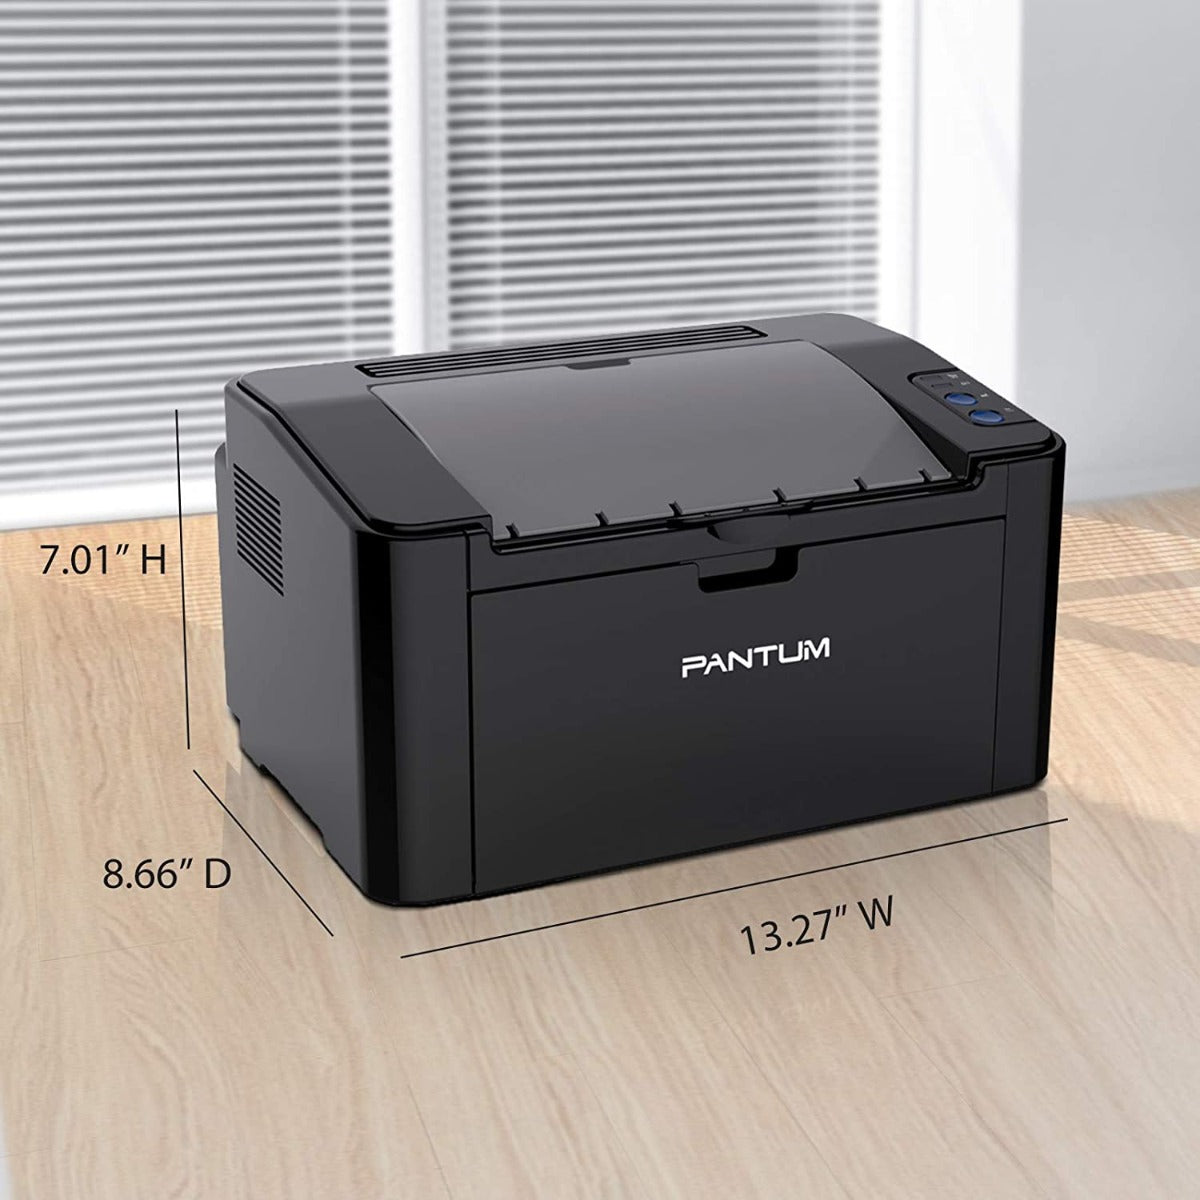 PANTUM P2502W Wireless Monochrome Laser Printer